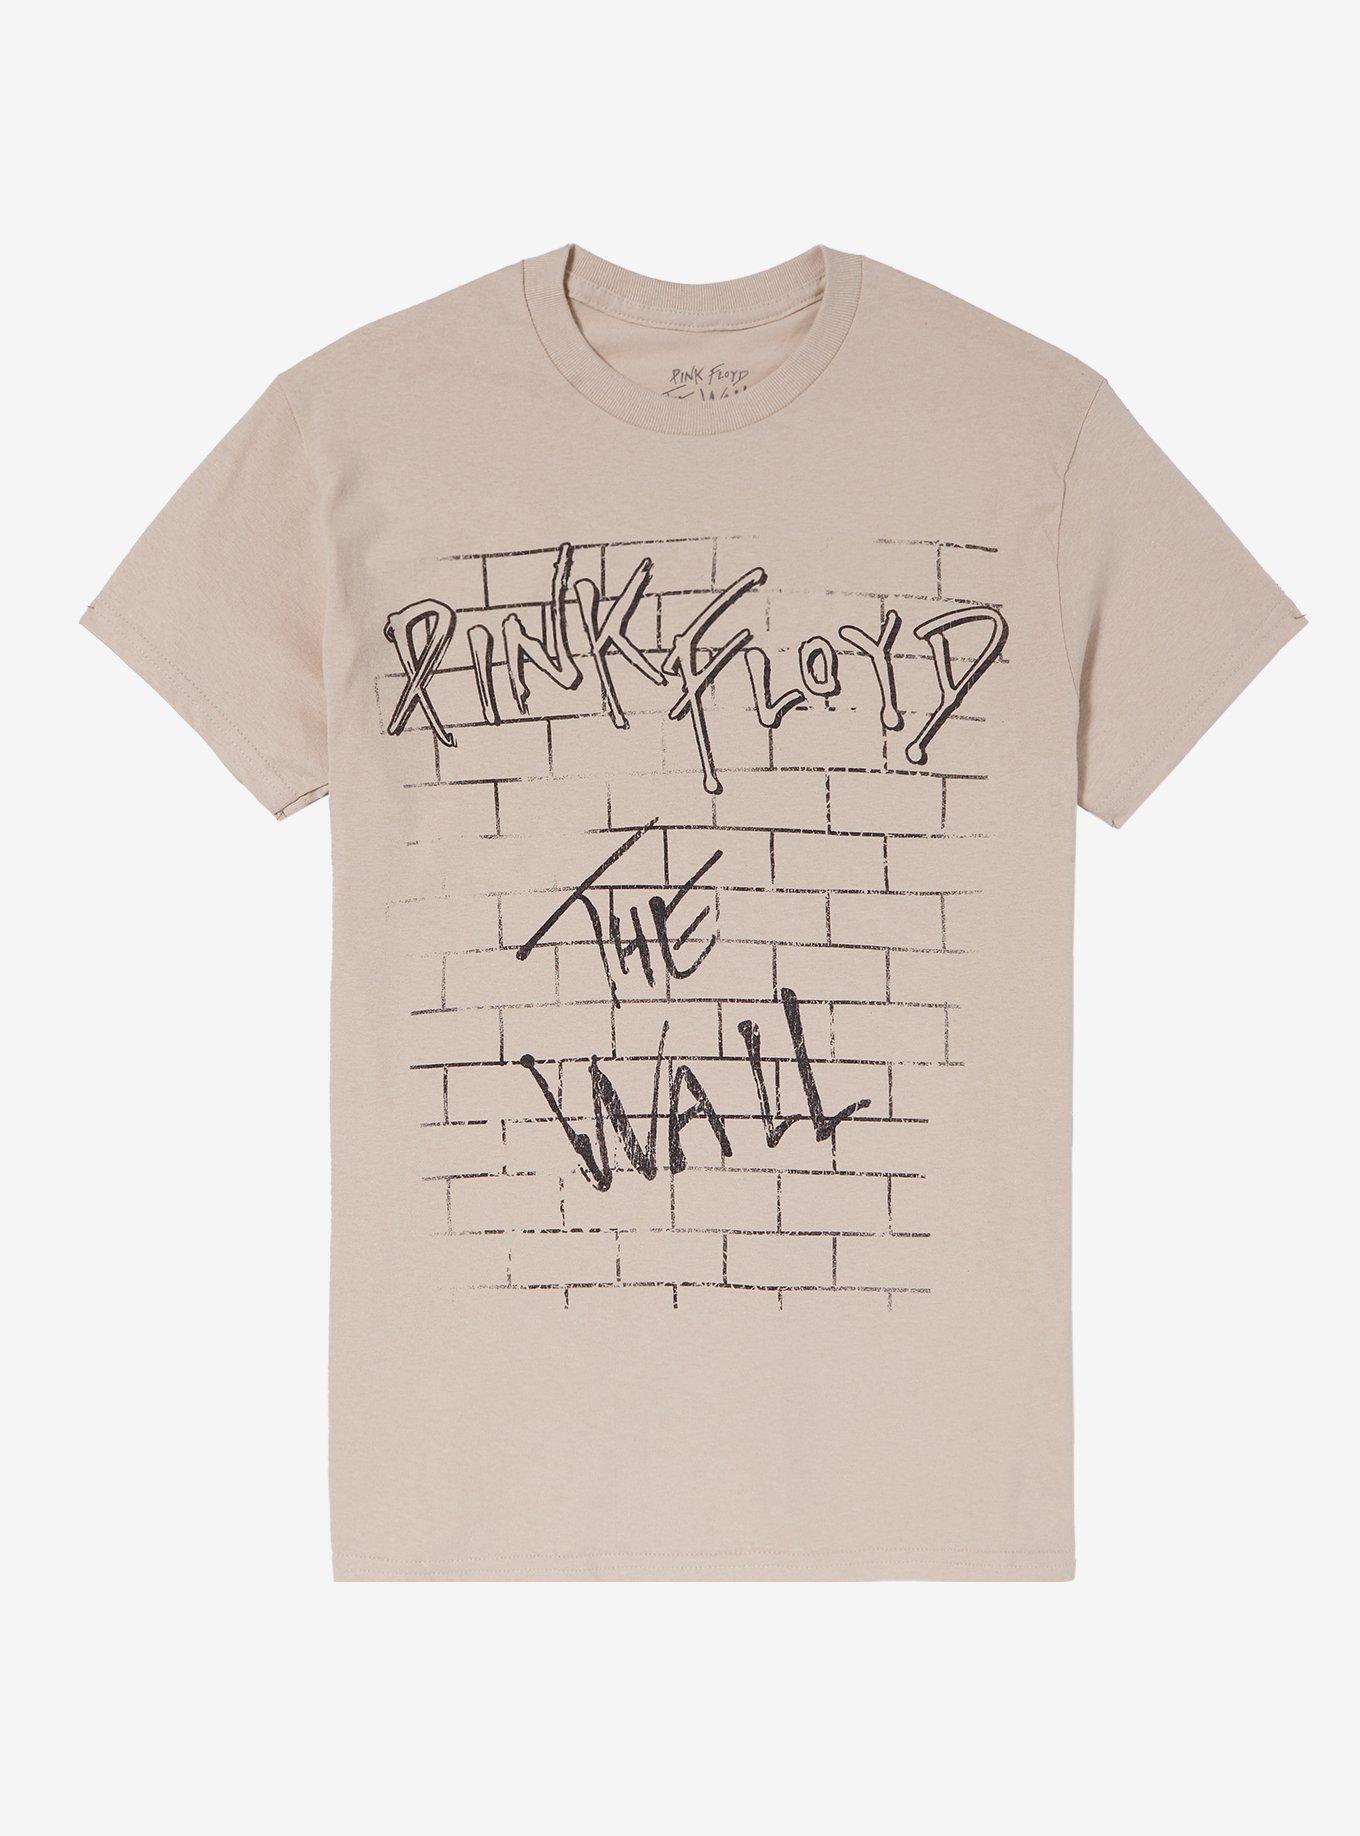 Pink Floyd The Wall Tan Boyfriend Fit Girls T-Shirt, SAND, hi-res